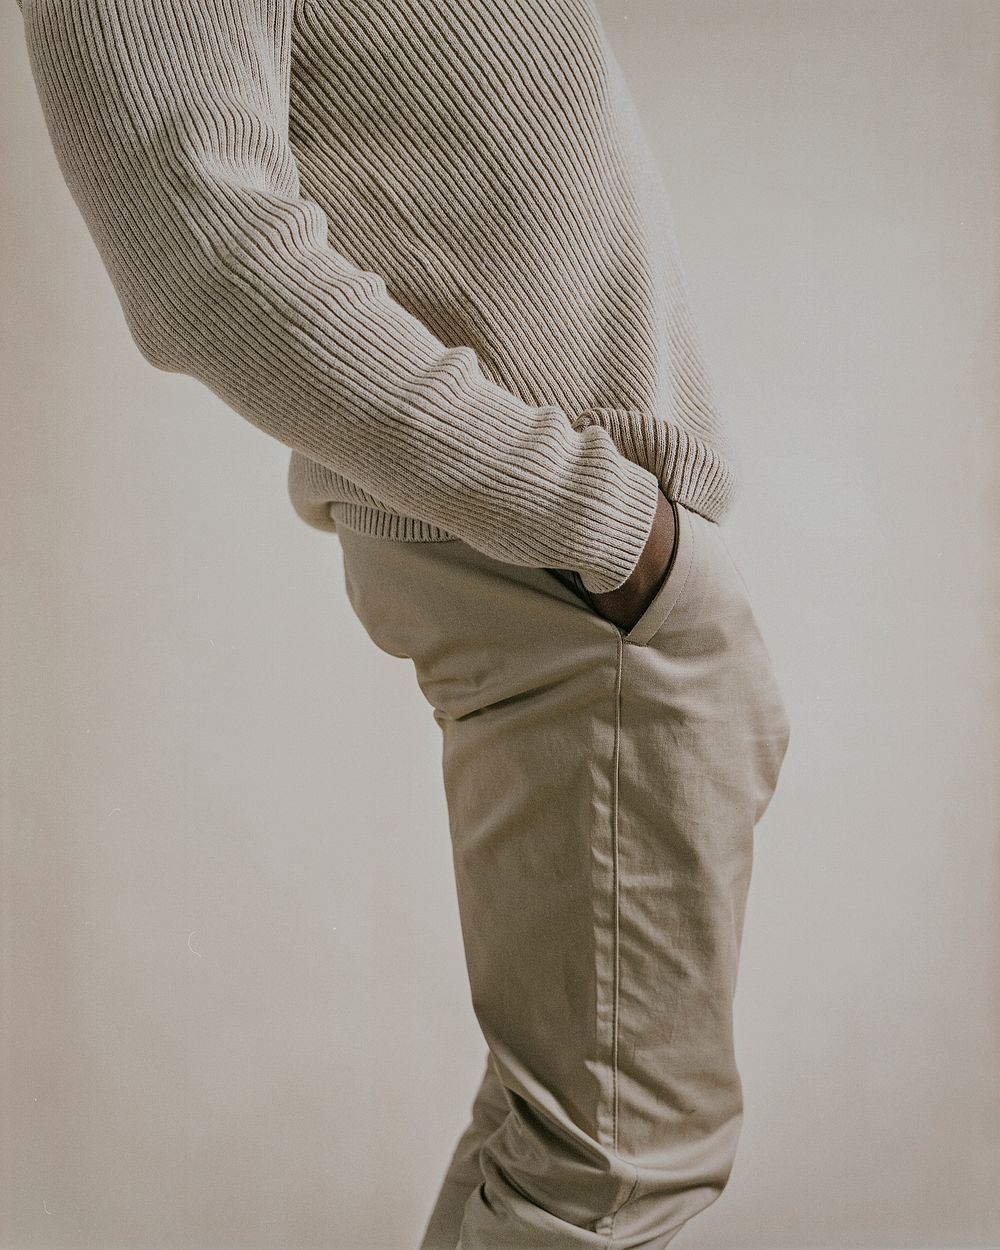 Men's beige pants, wool sweater, retro film photo